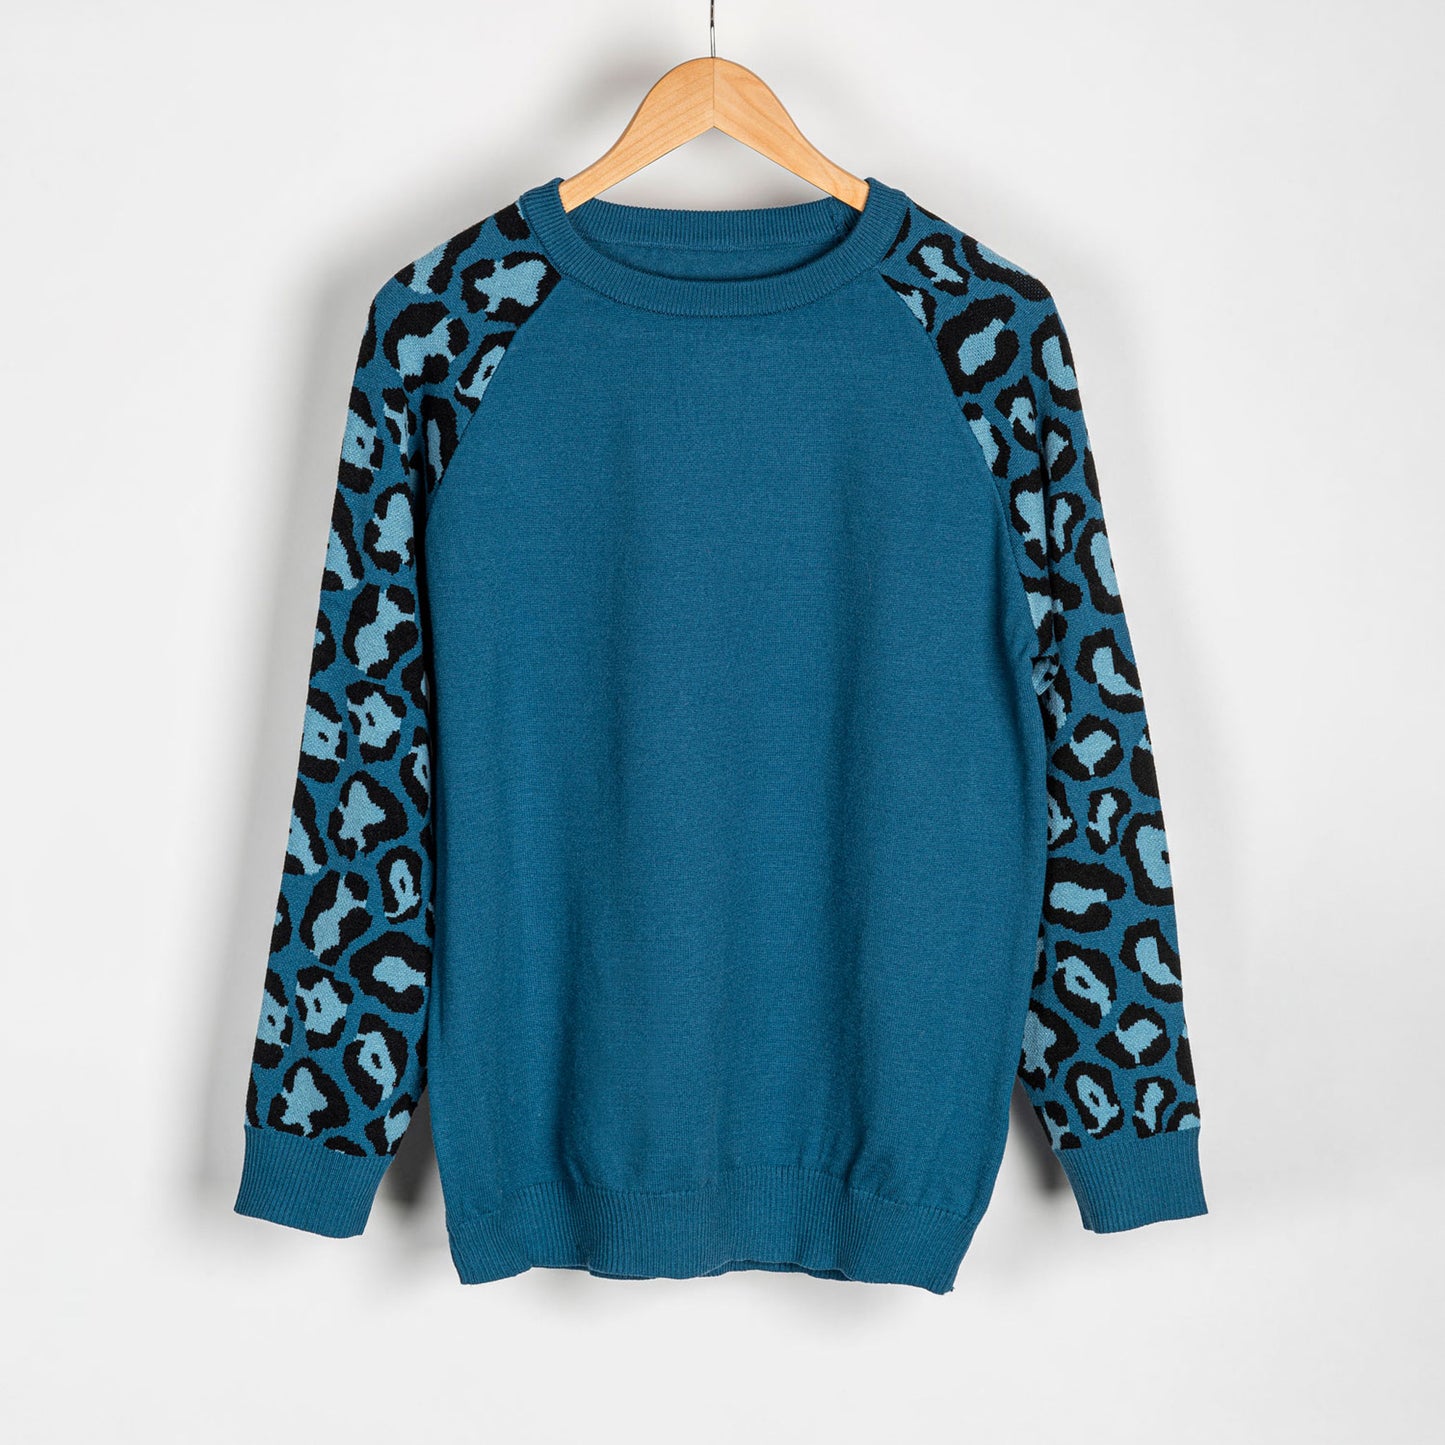 Contrast Animal Print Soft Knit Long Sleeve Sweater